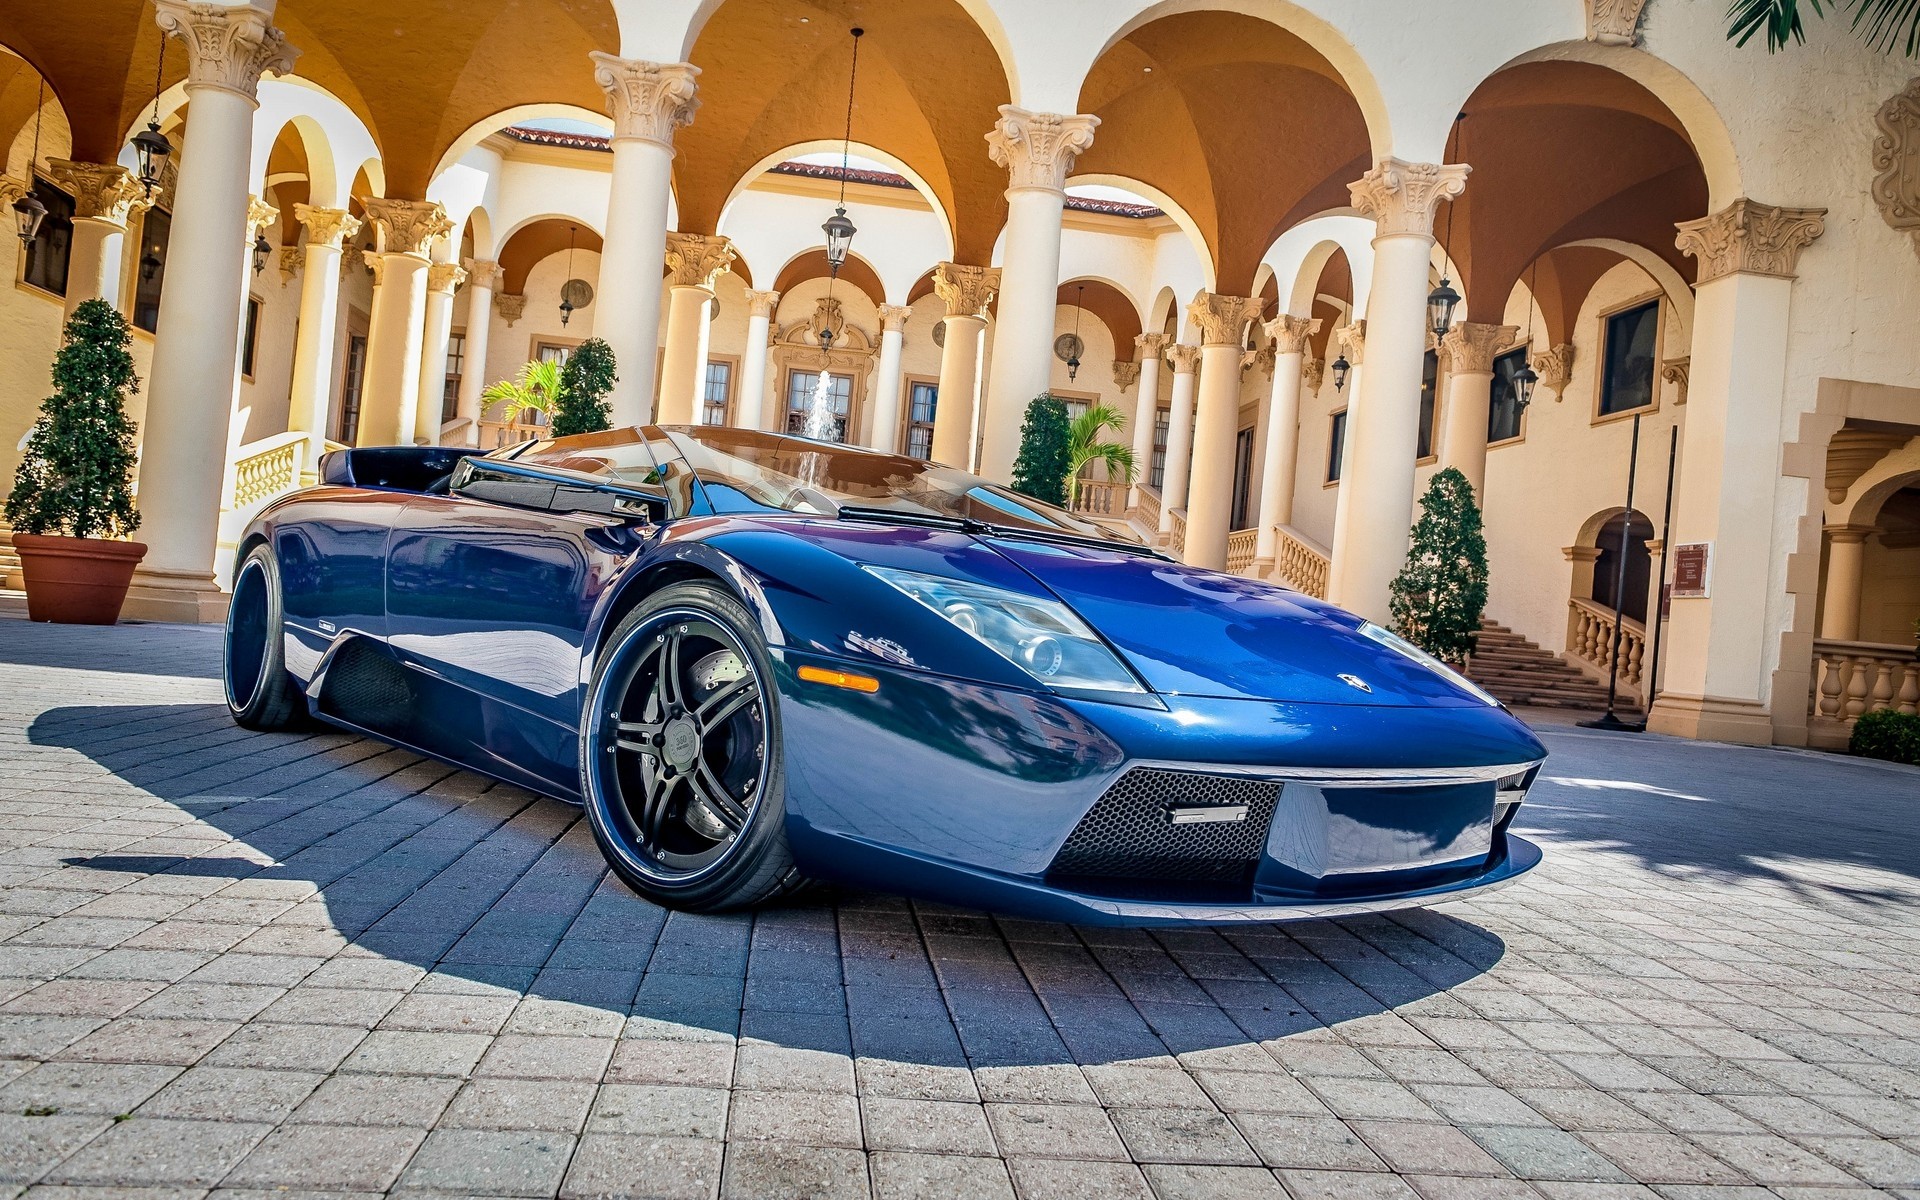 A beautiful blue Lamborghini Aventador.